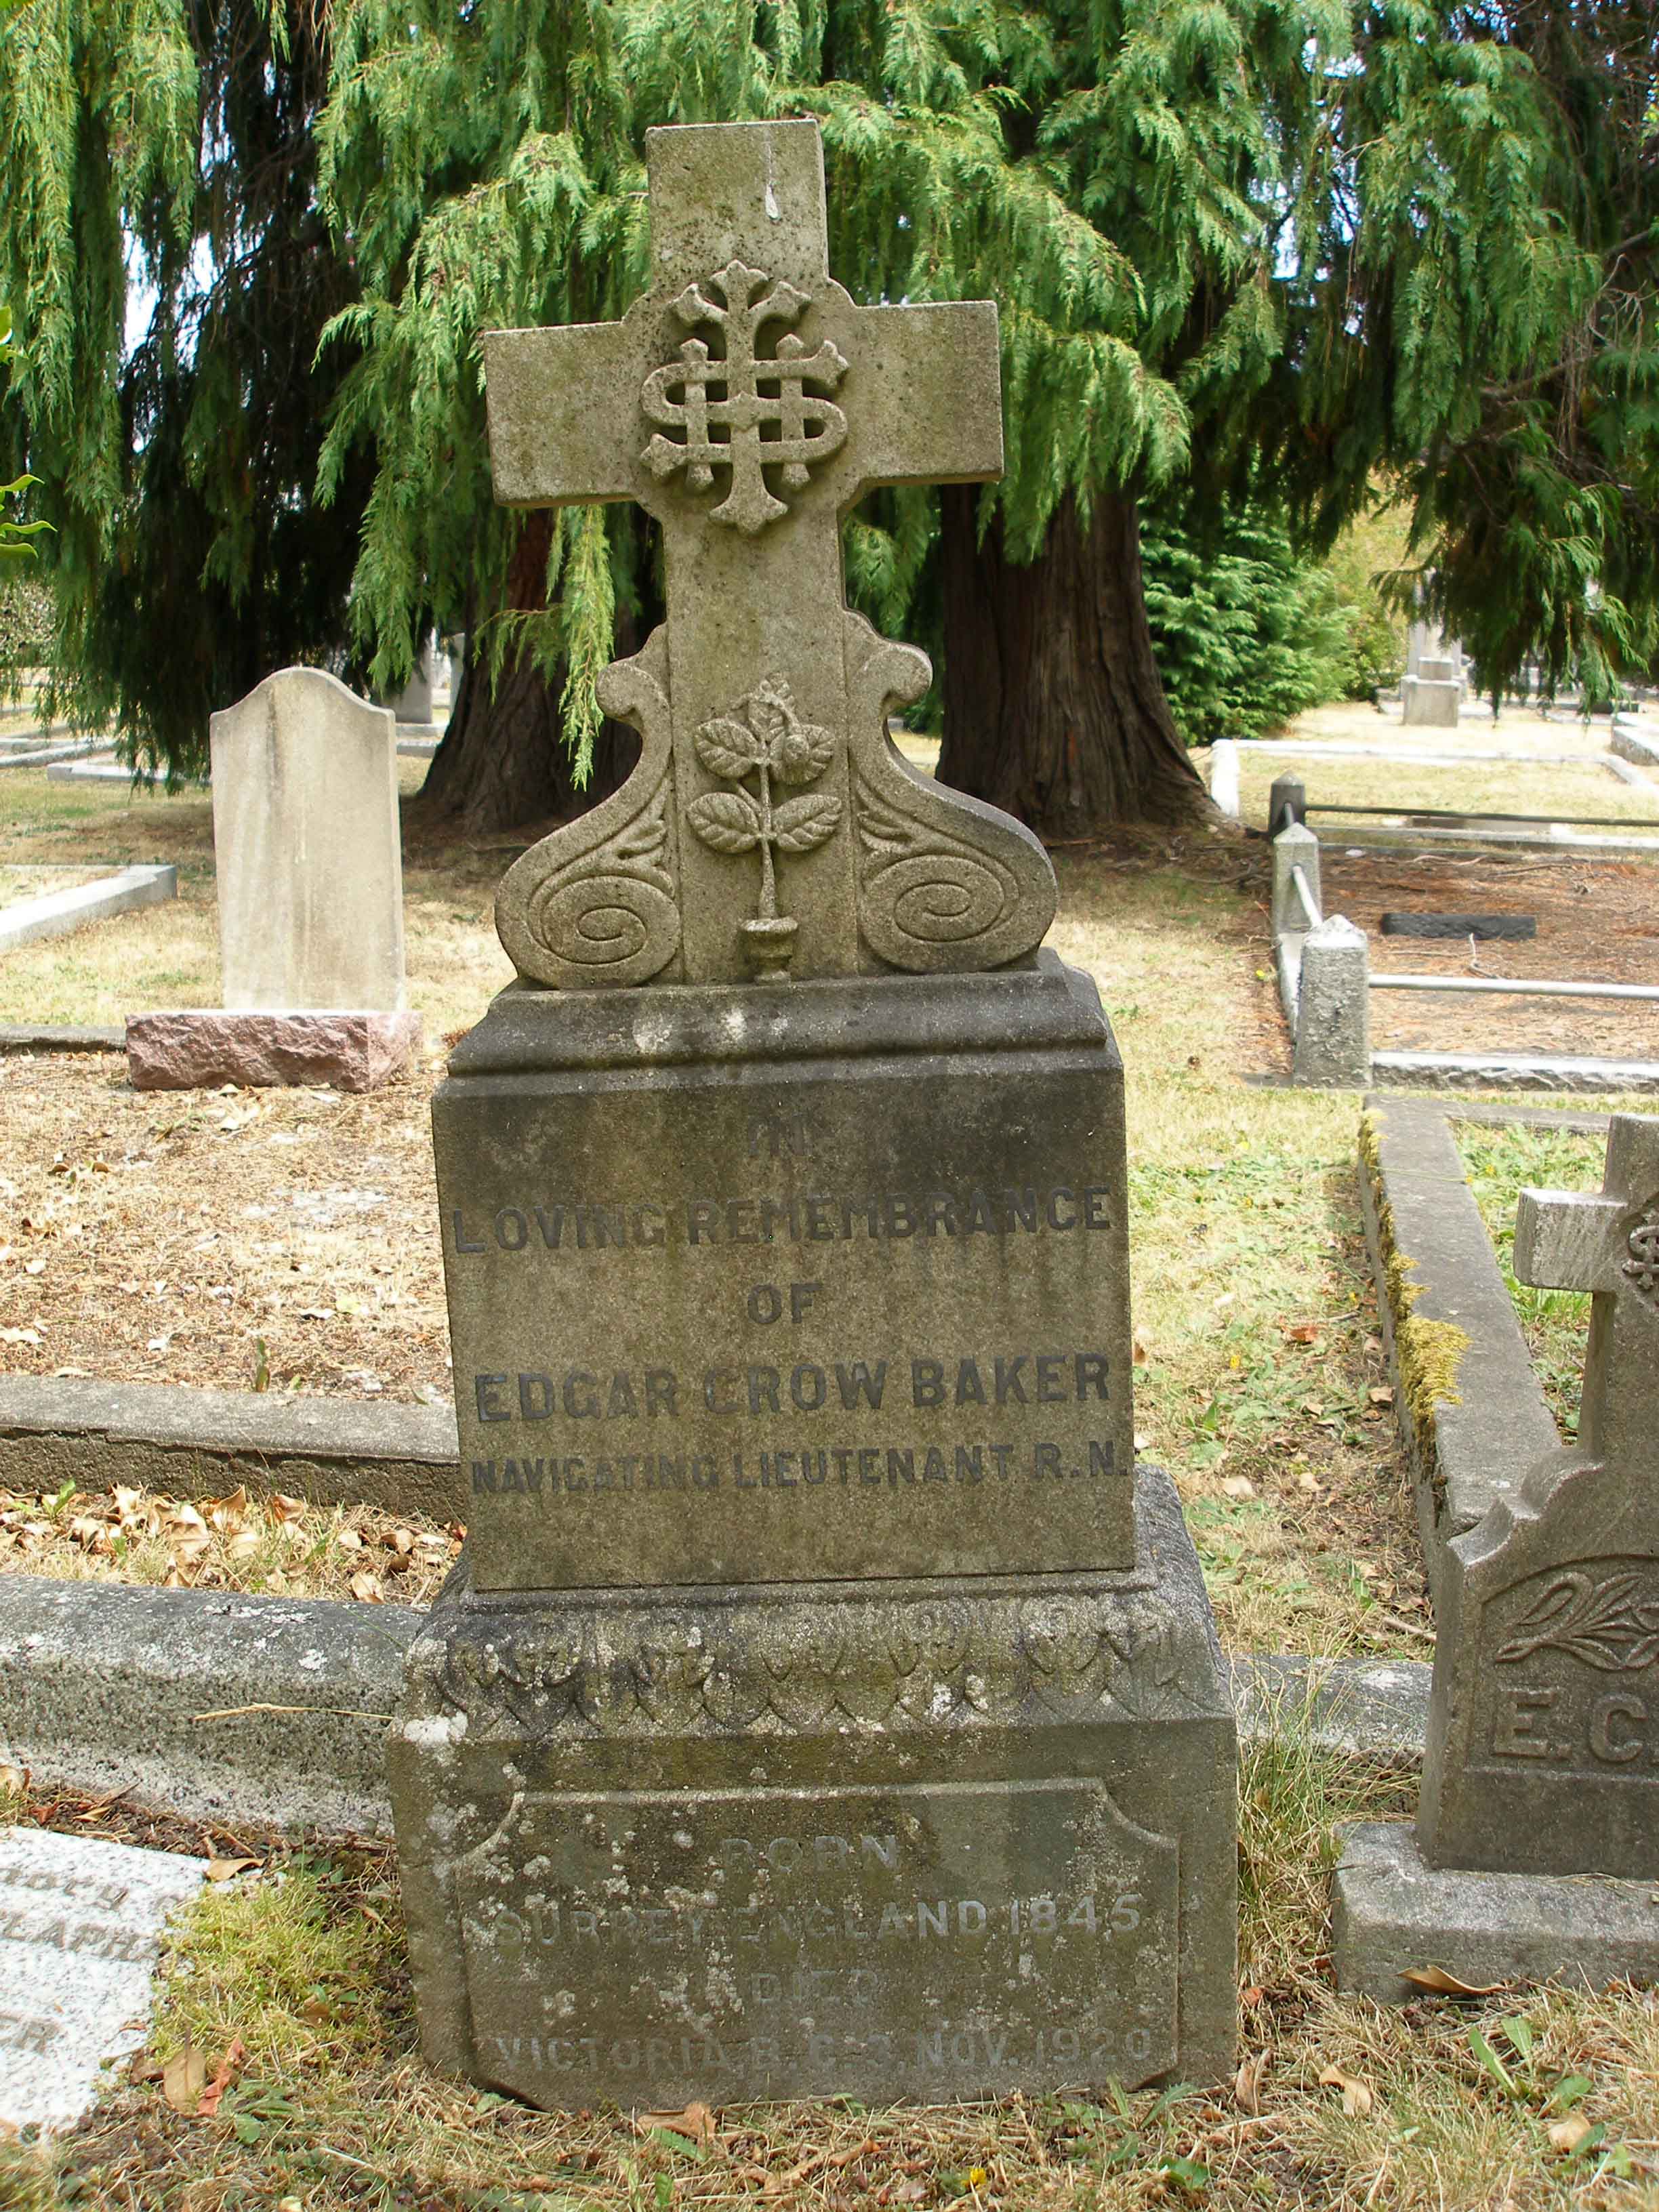 Edgar Crow Baker headstone